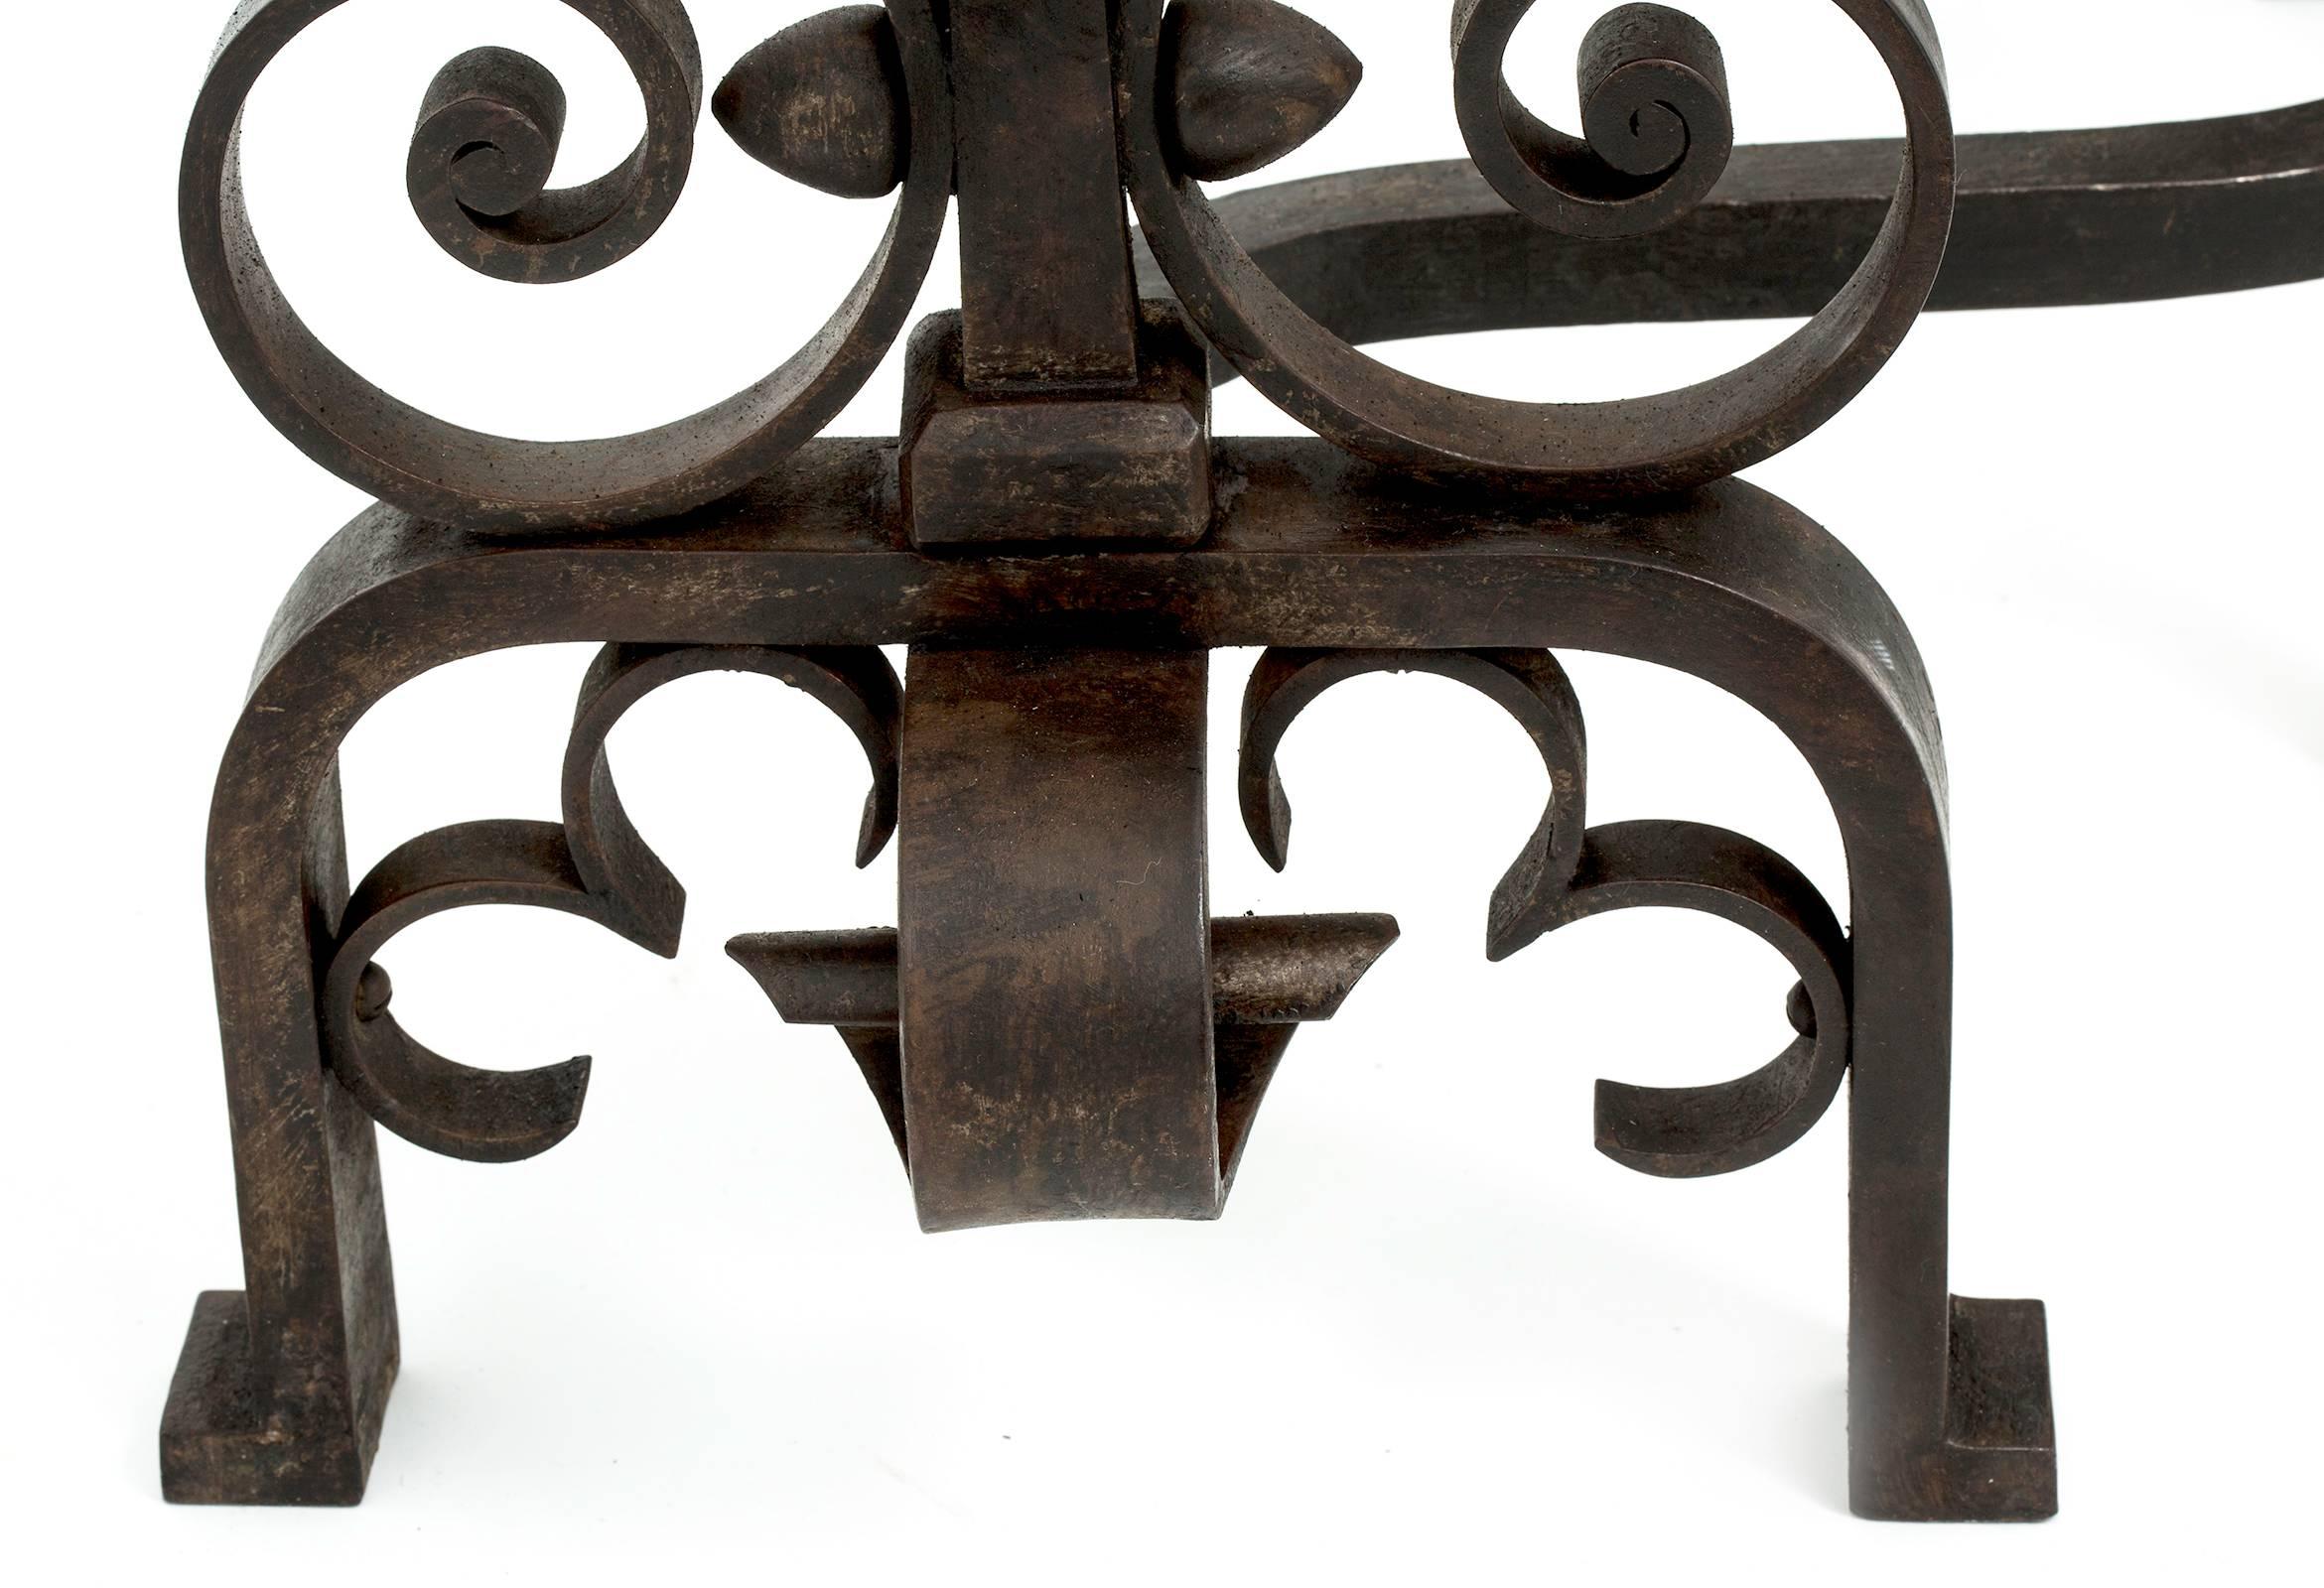  Antique Wrought Iron Andirons 4